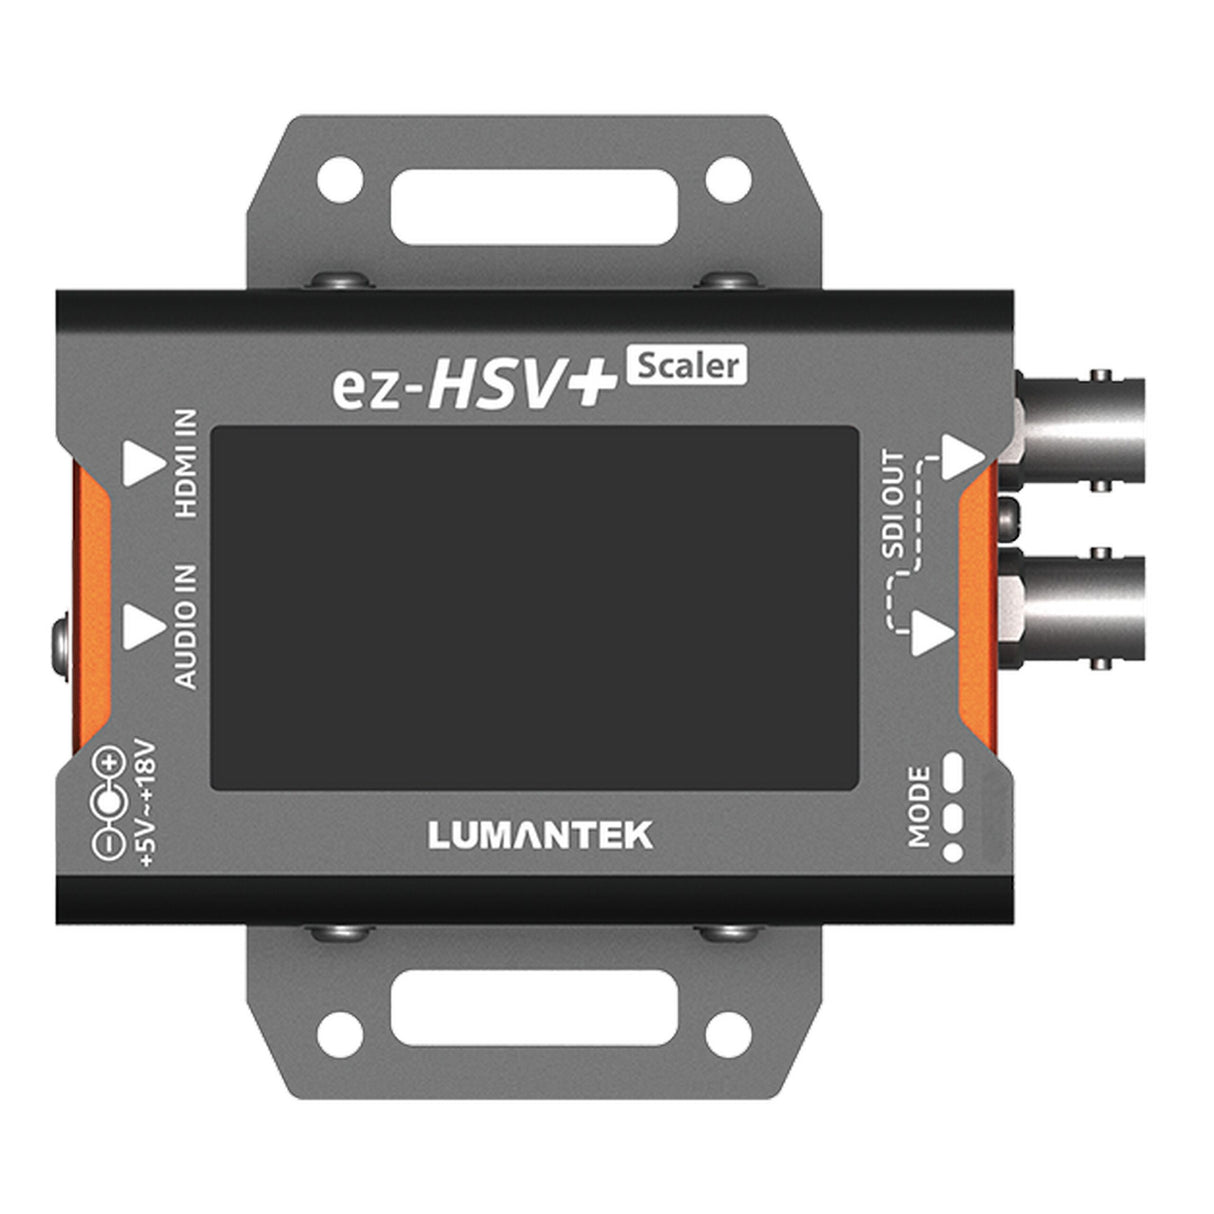 Lumantek ez-HSV+ HDMI to SDI Converter with Display